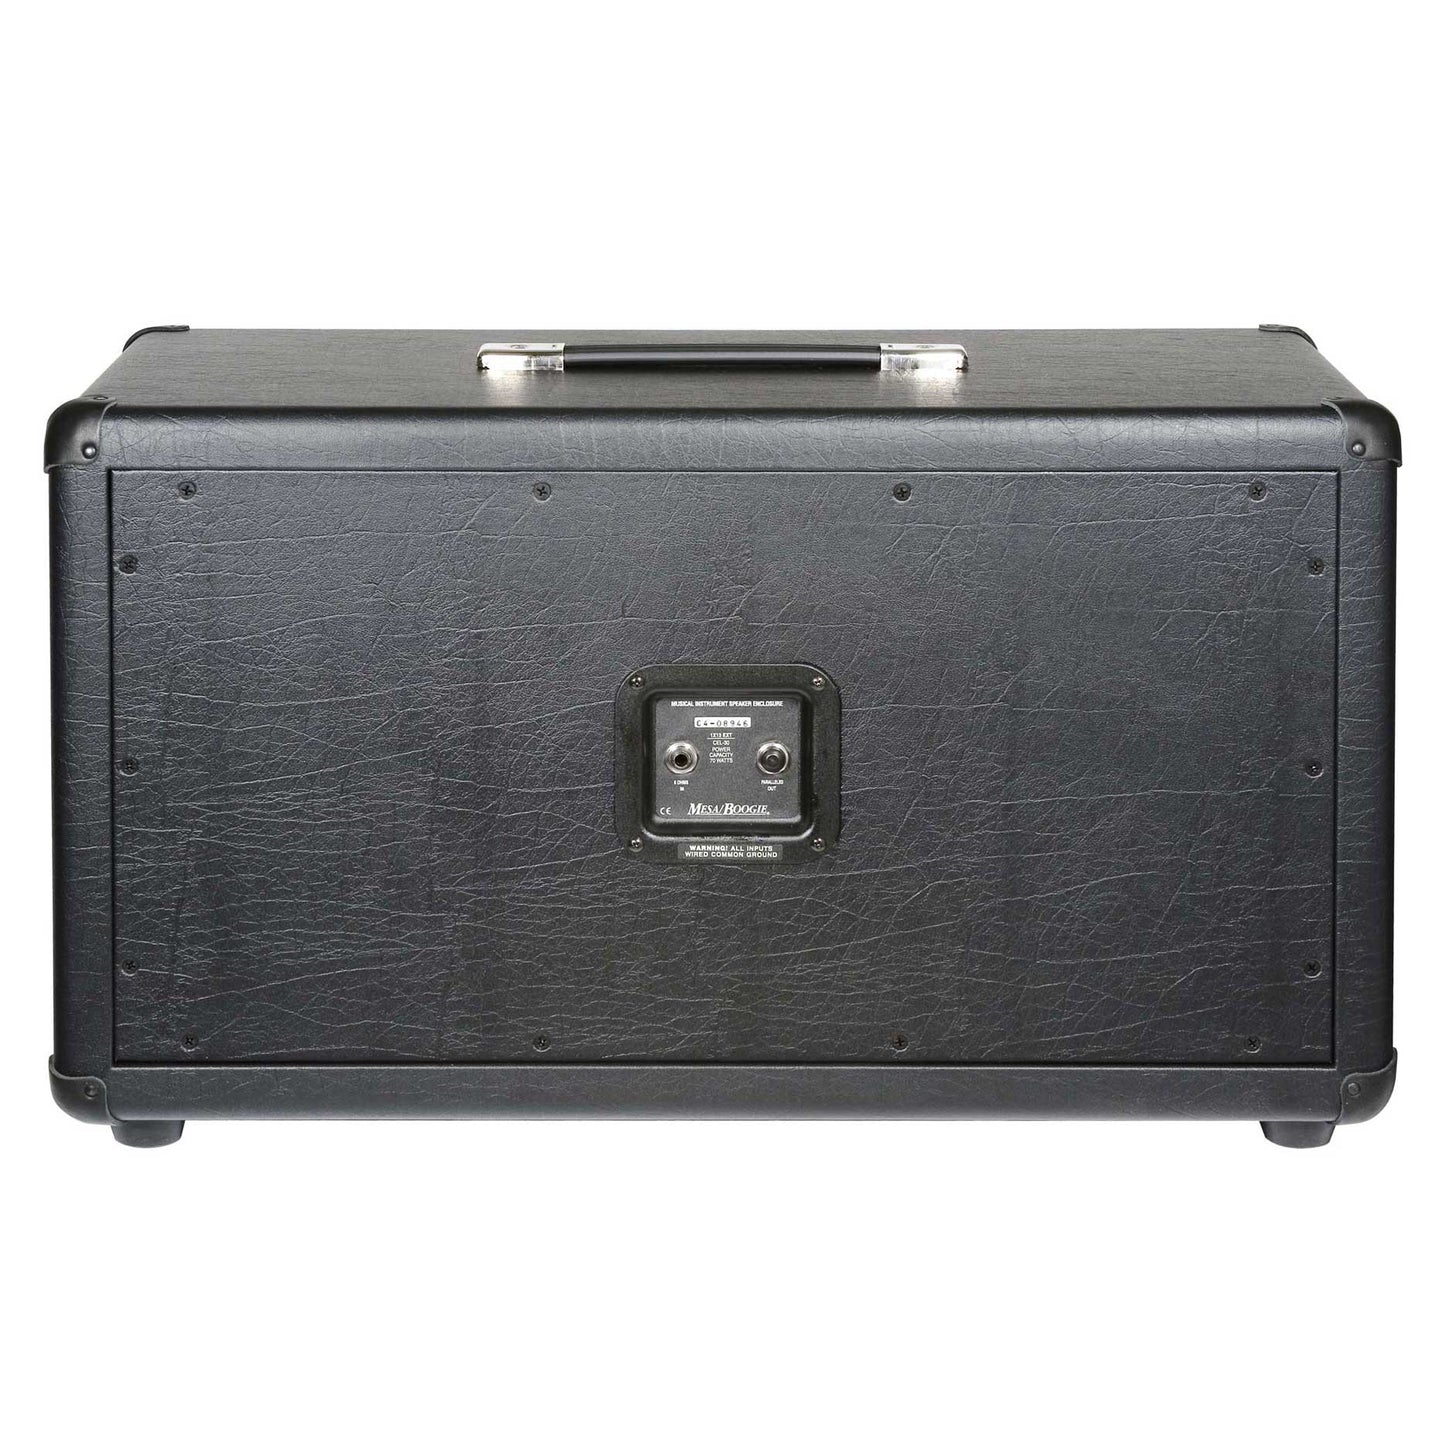 Mesa Boogie Rectifier 2x12” Compact Guitar Cabinet